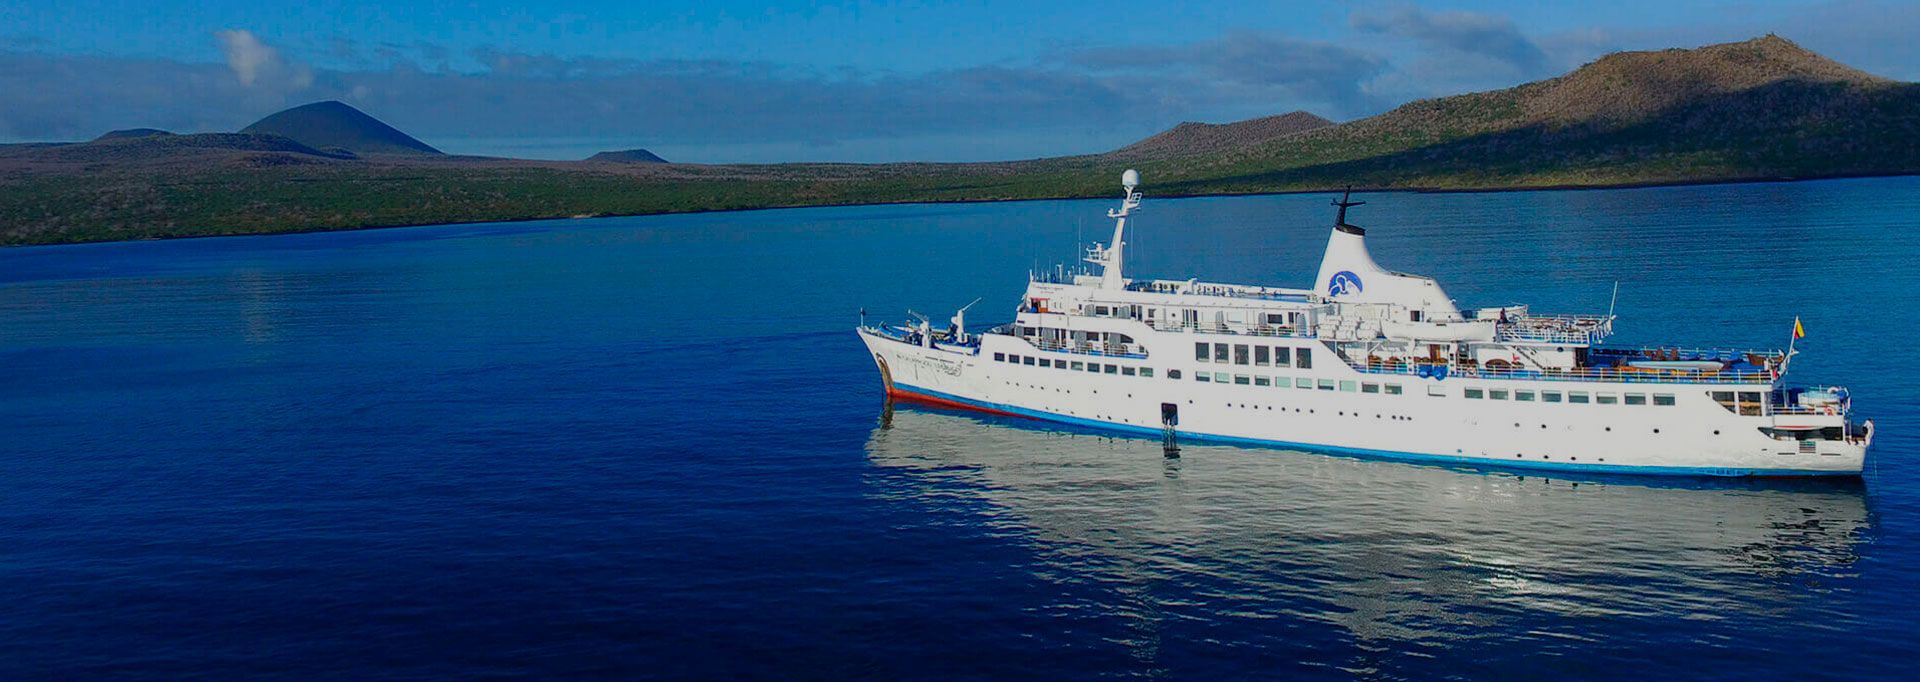 Galapagos Islands Cruise Ships